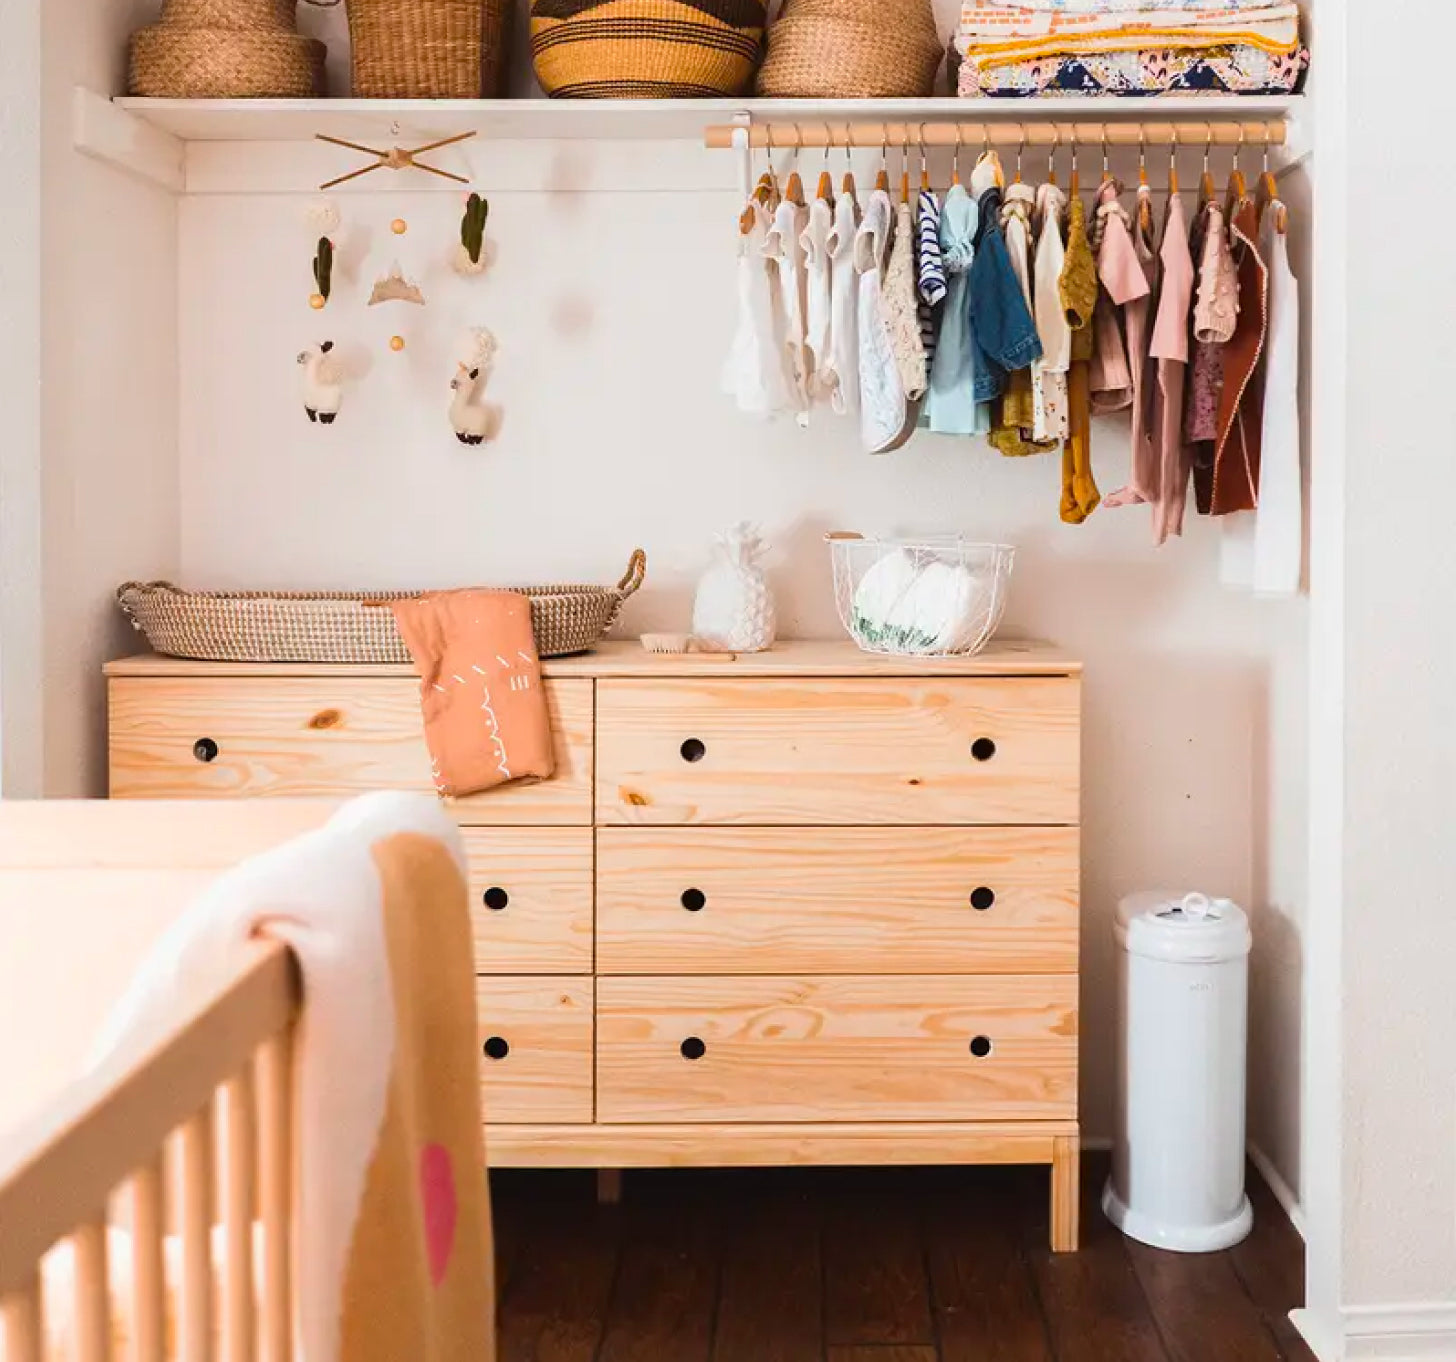 Image of nursery storage in closet